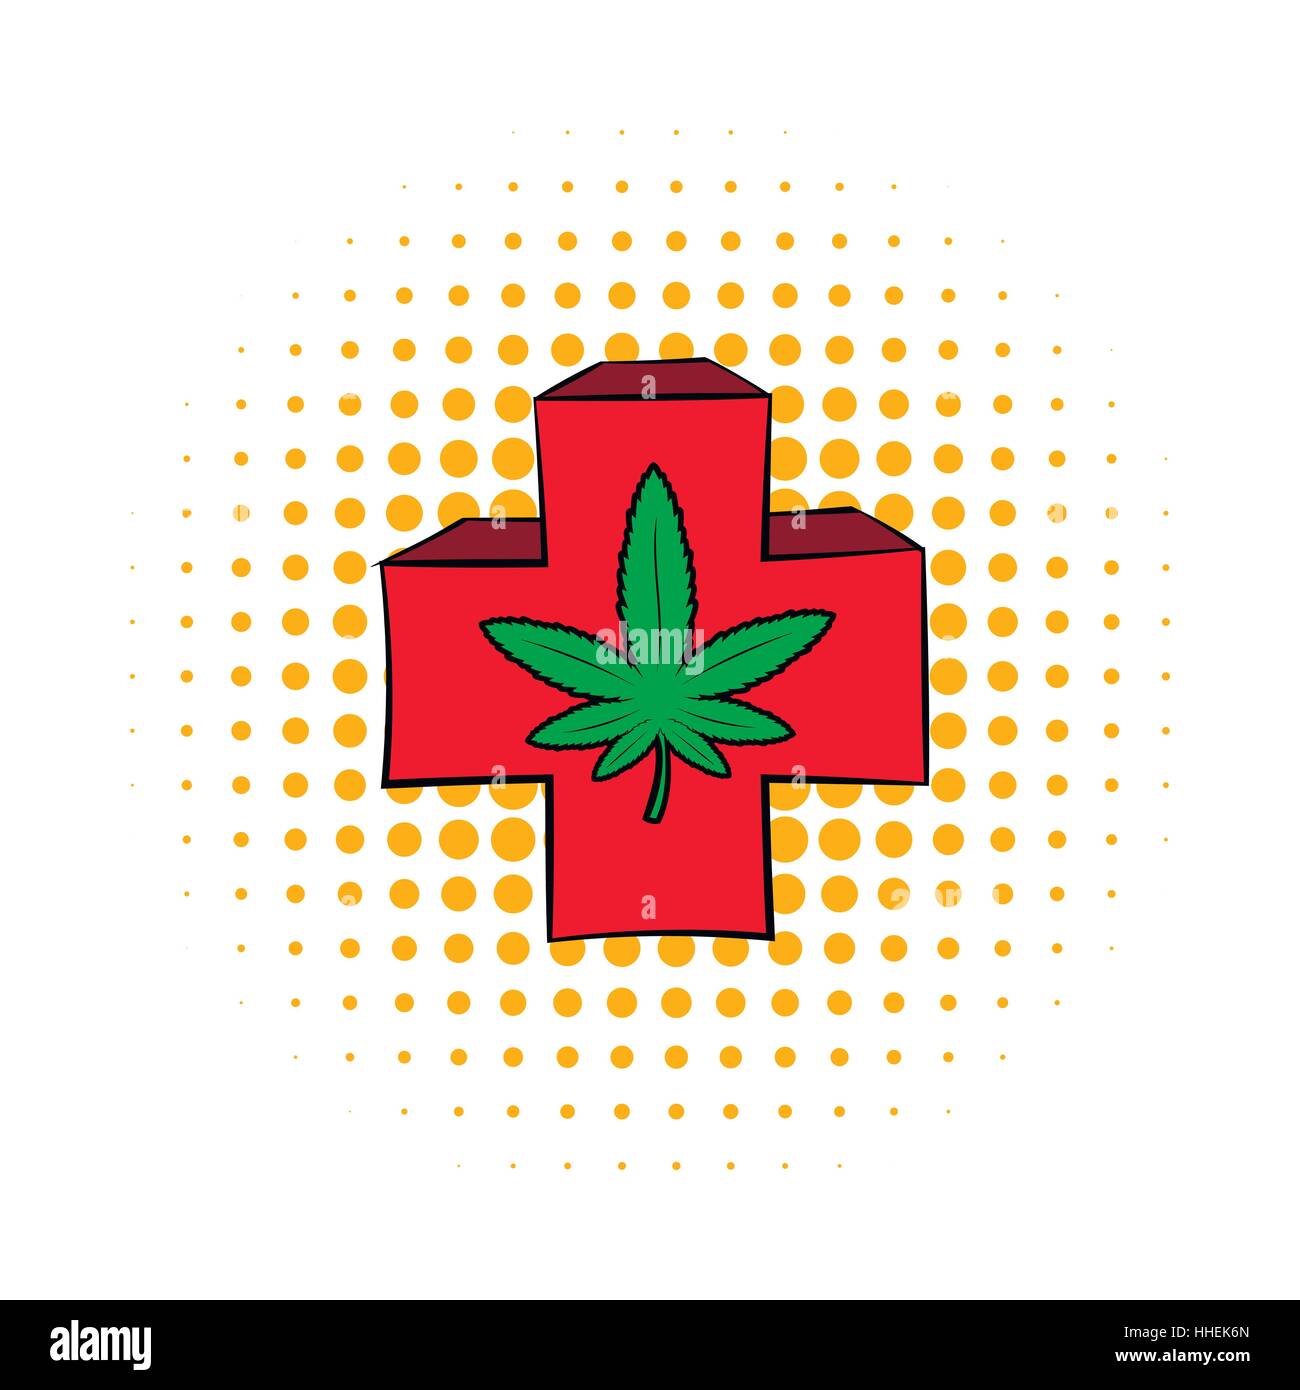 Marijuana leaf on a red cross icon, comics style Stock Vector